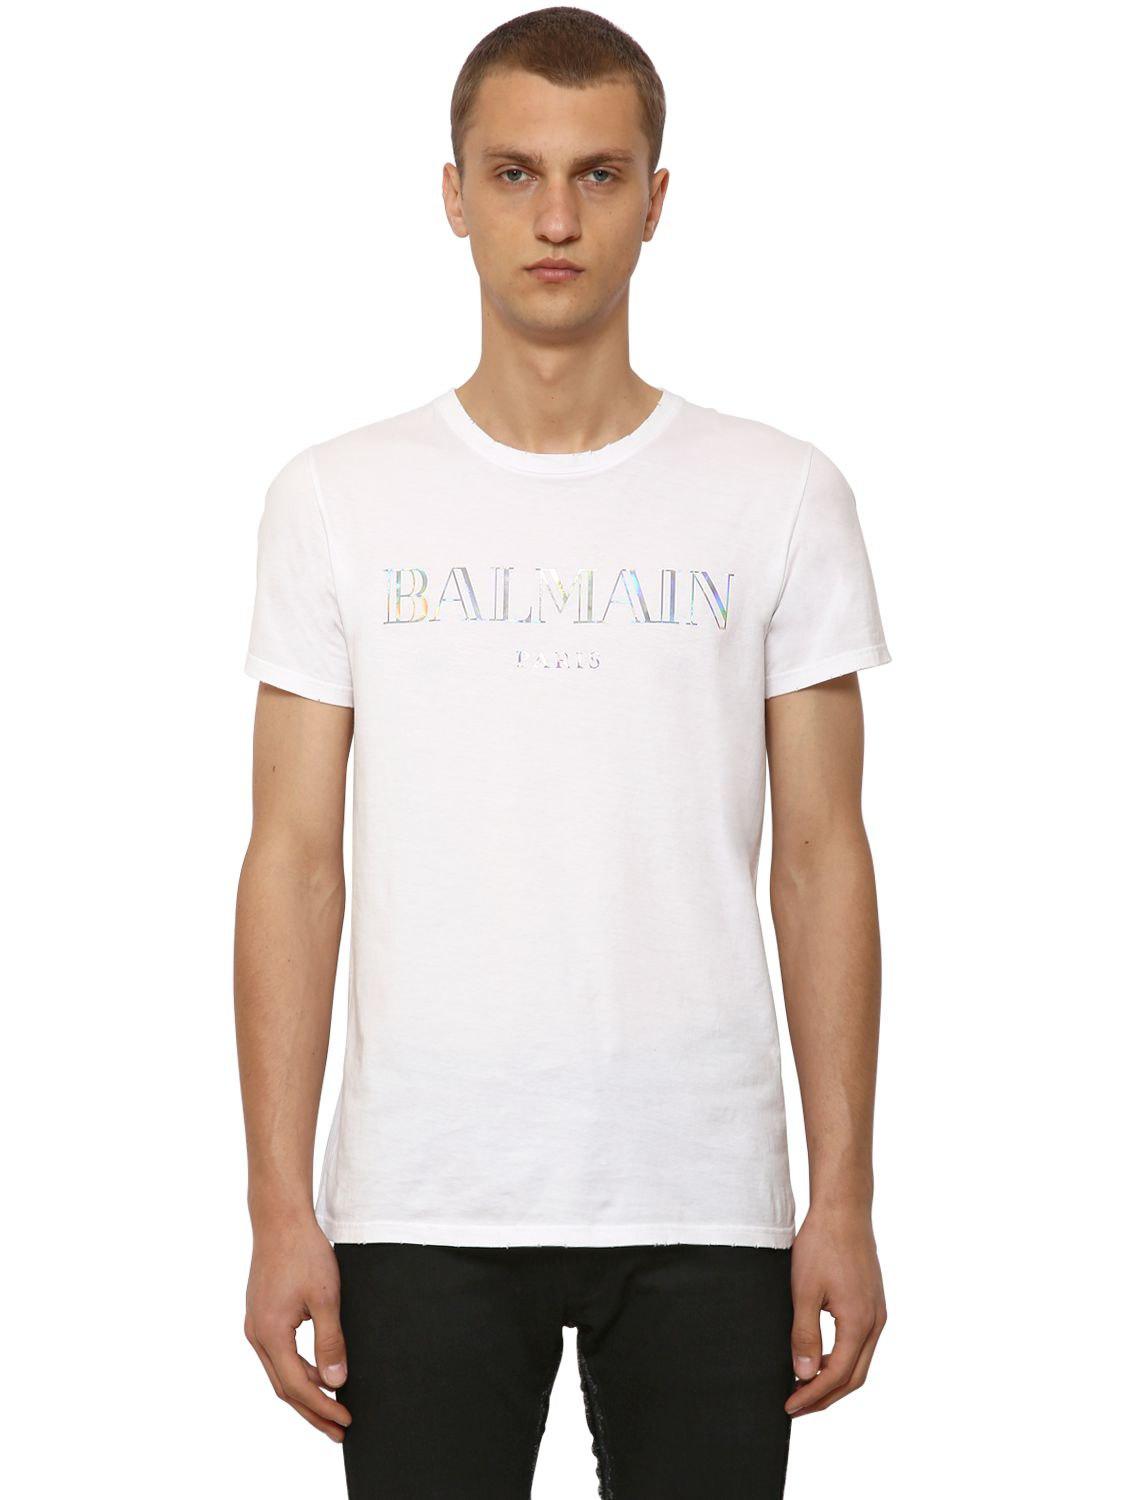 Lyst - Balmain Logo Print Cotton Jersey T-shirt in White for Men